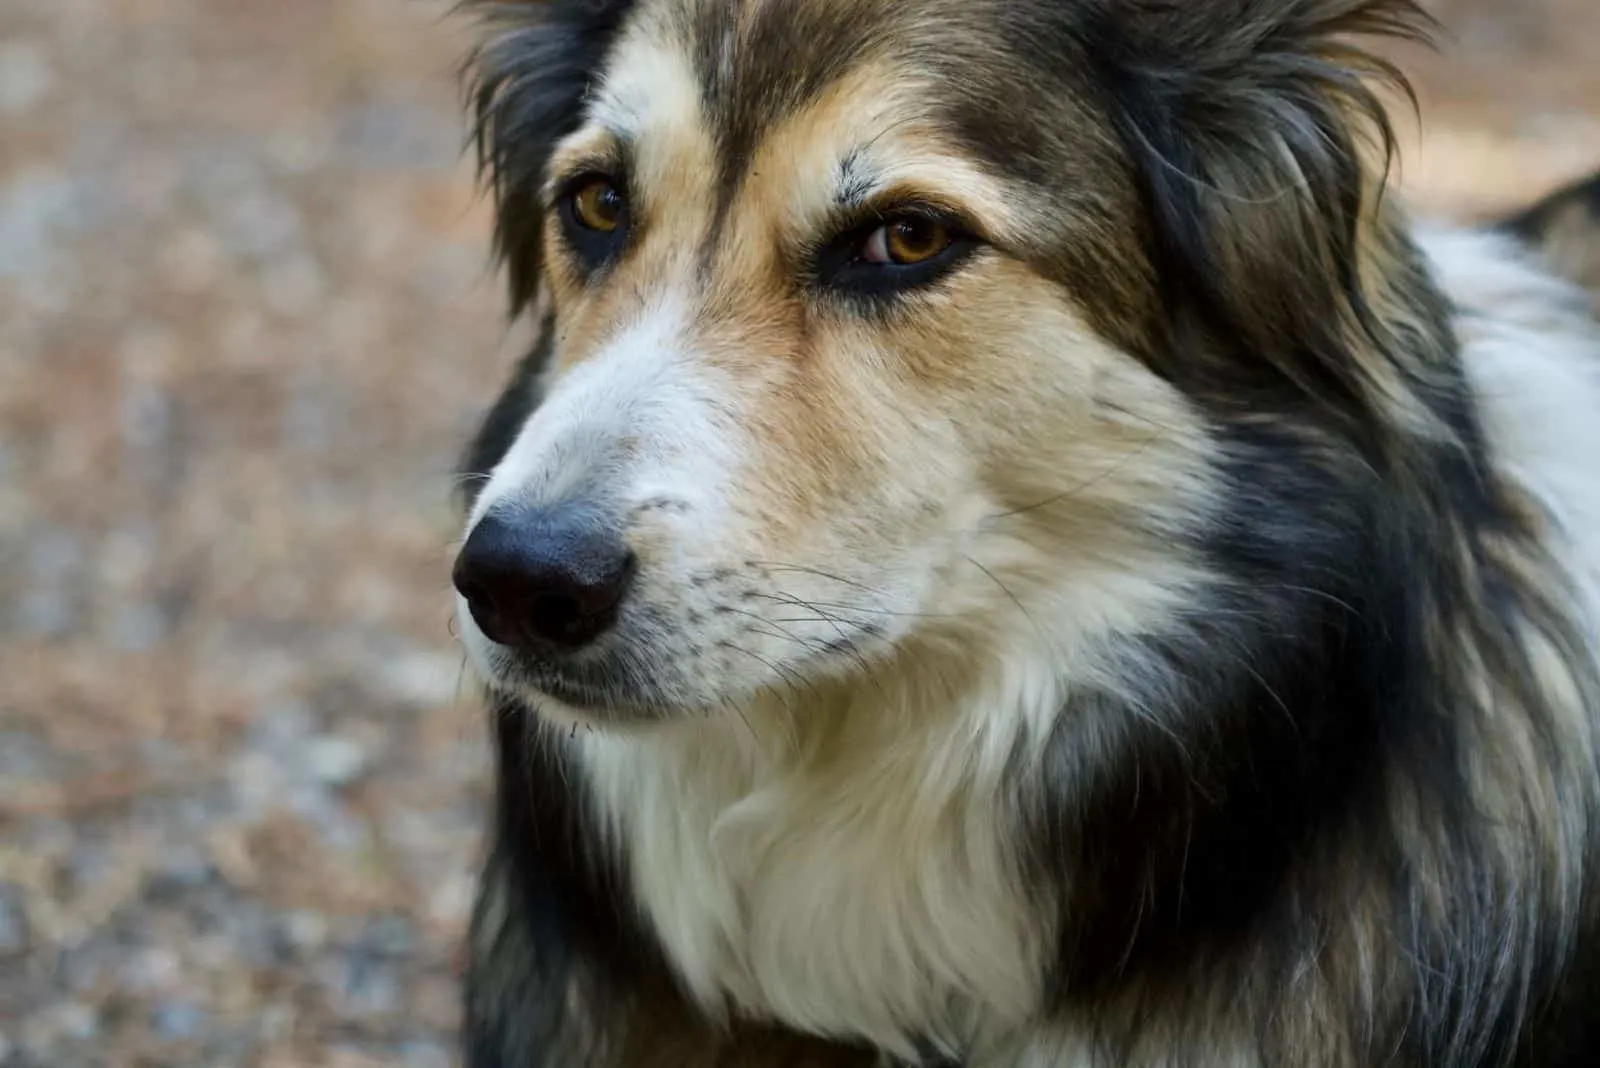 german shepherd collie cross breed dog in close up image